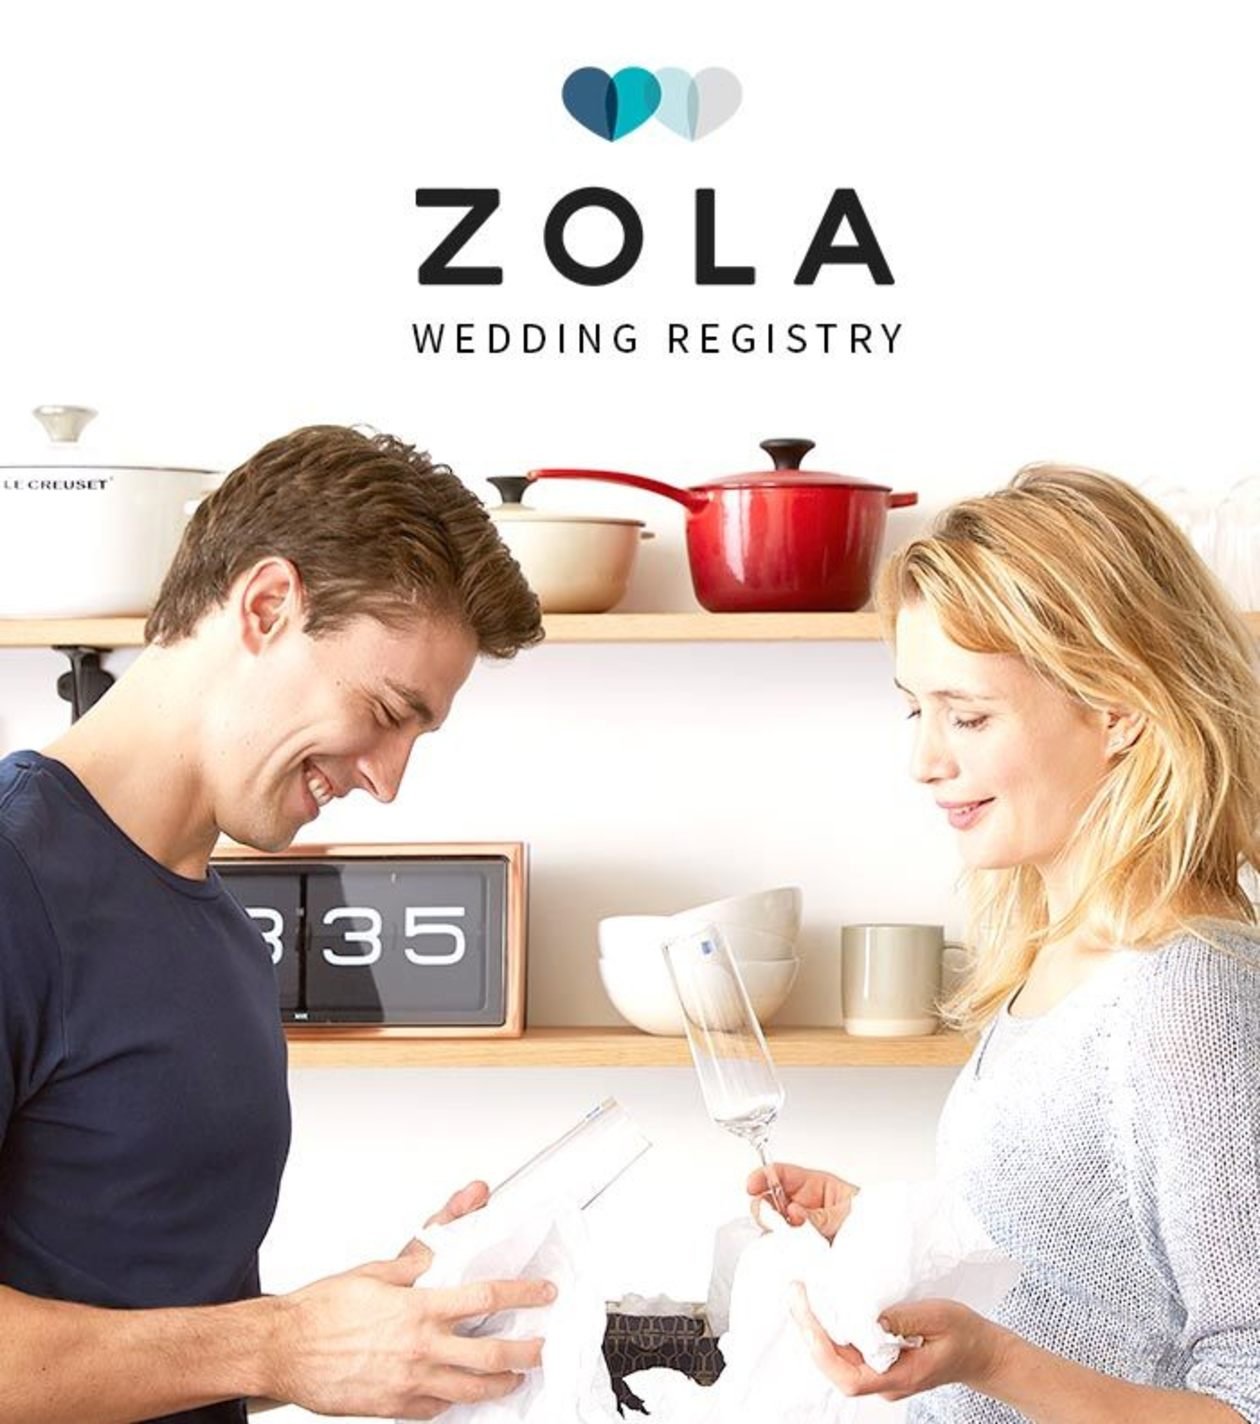 Create a Registry on Zola.com